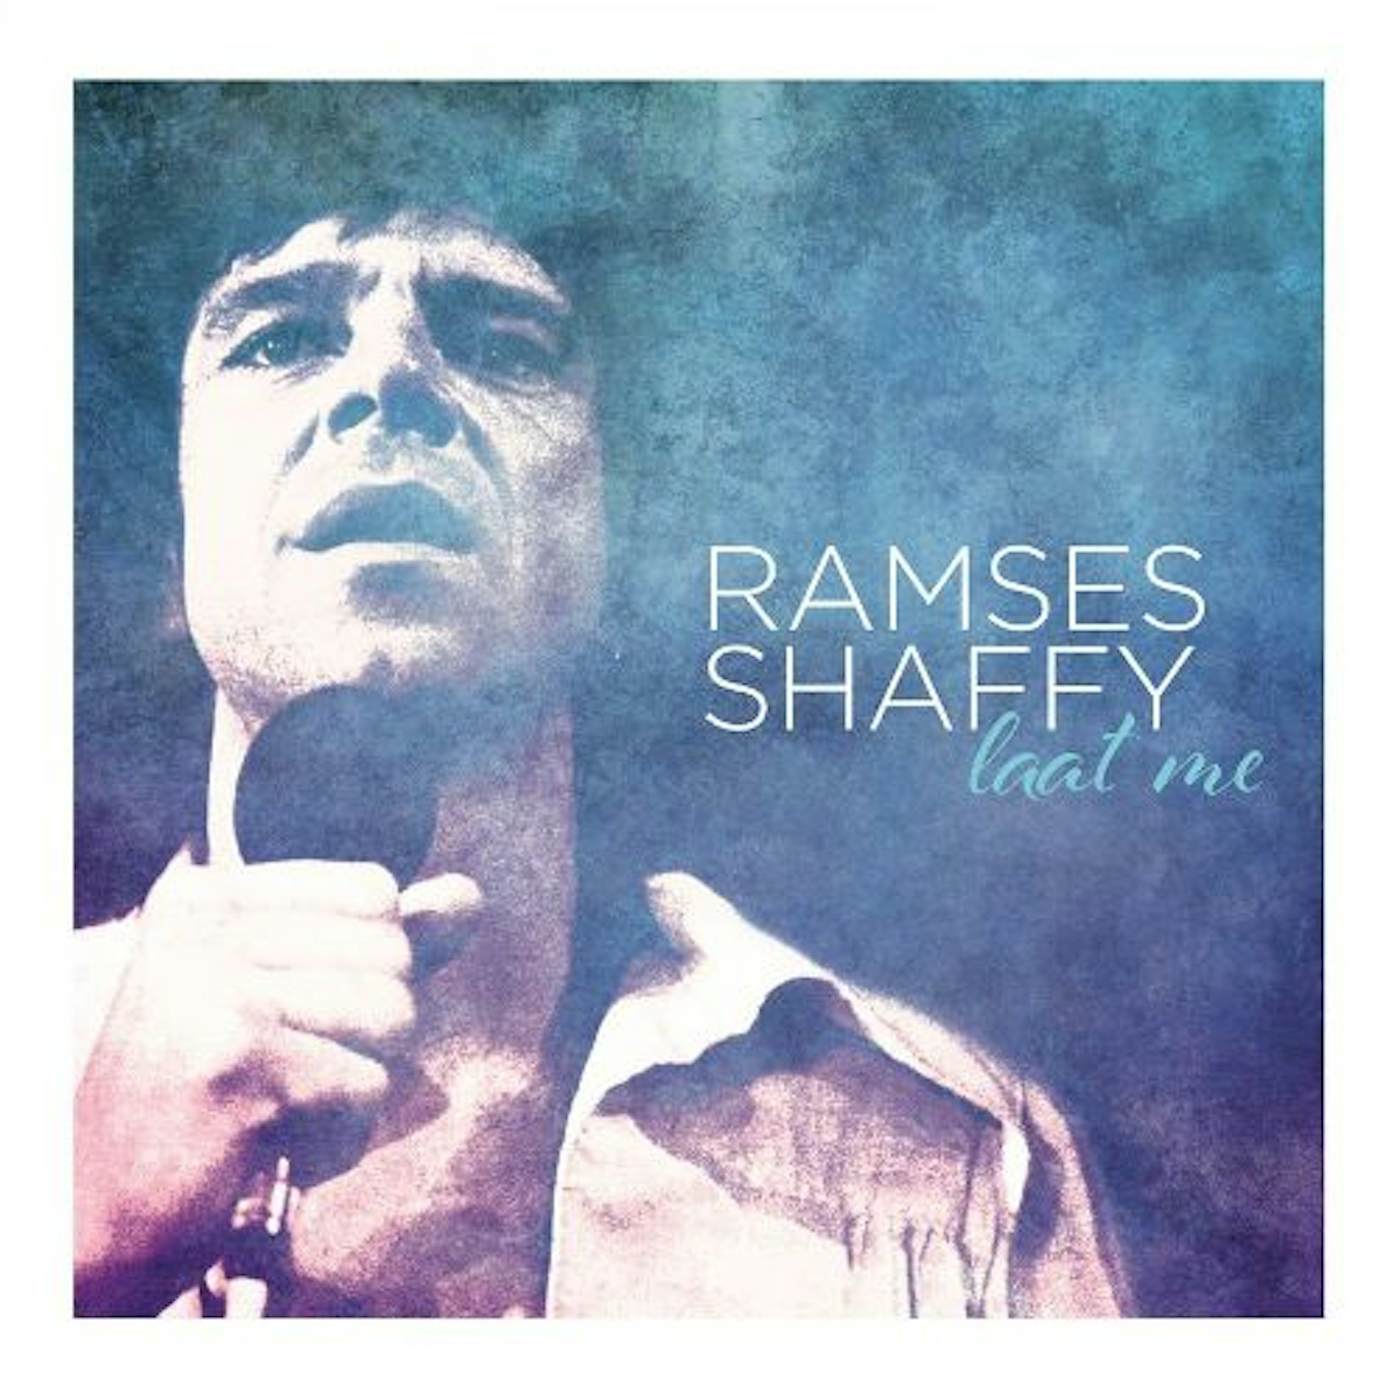 Ramses Shaffy LAAT ME Vinyl Record